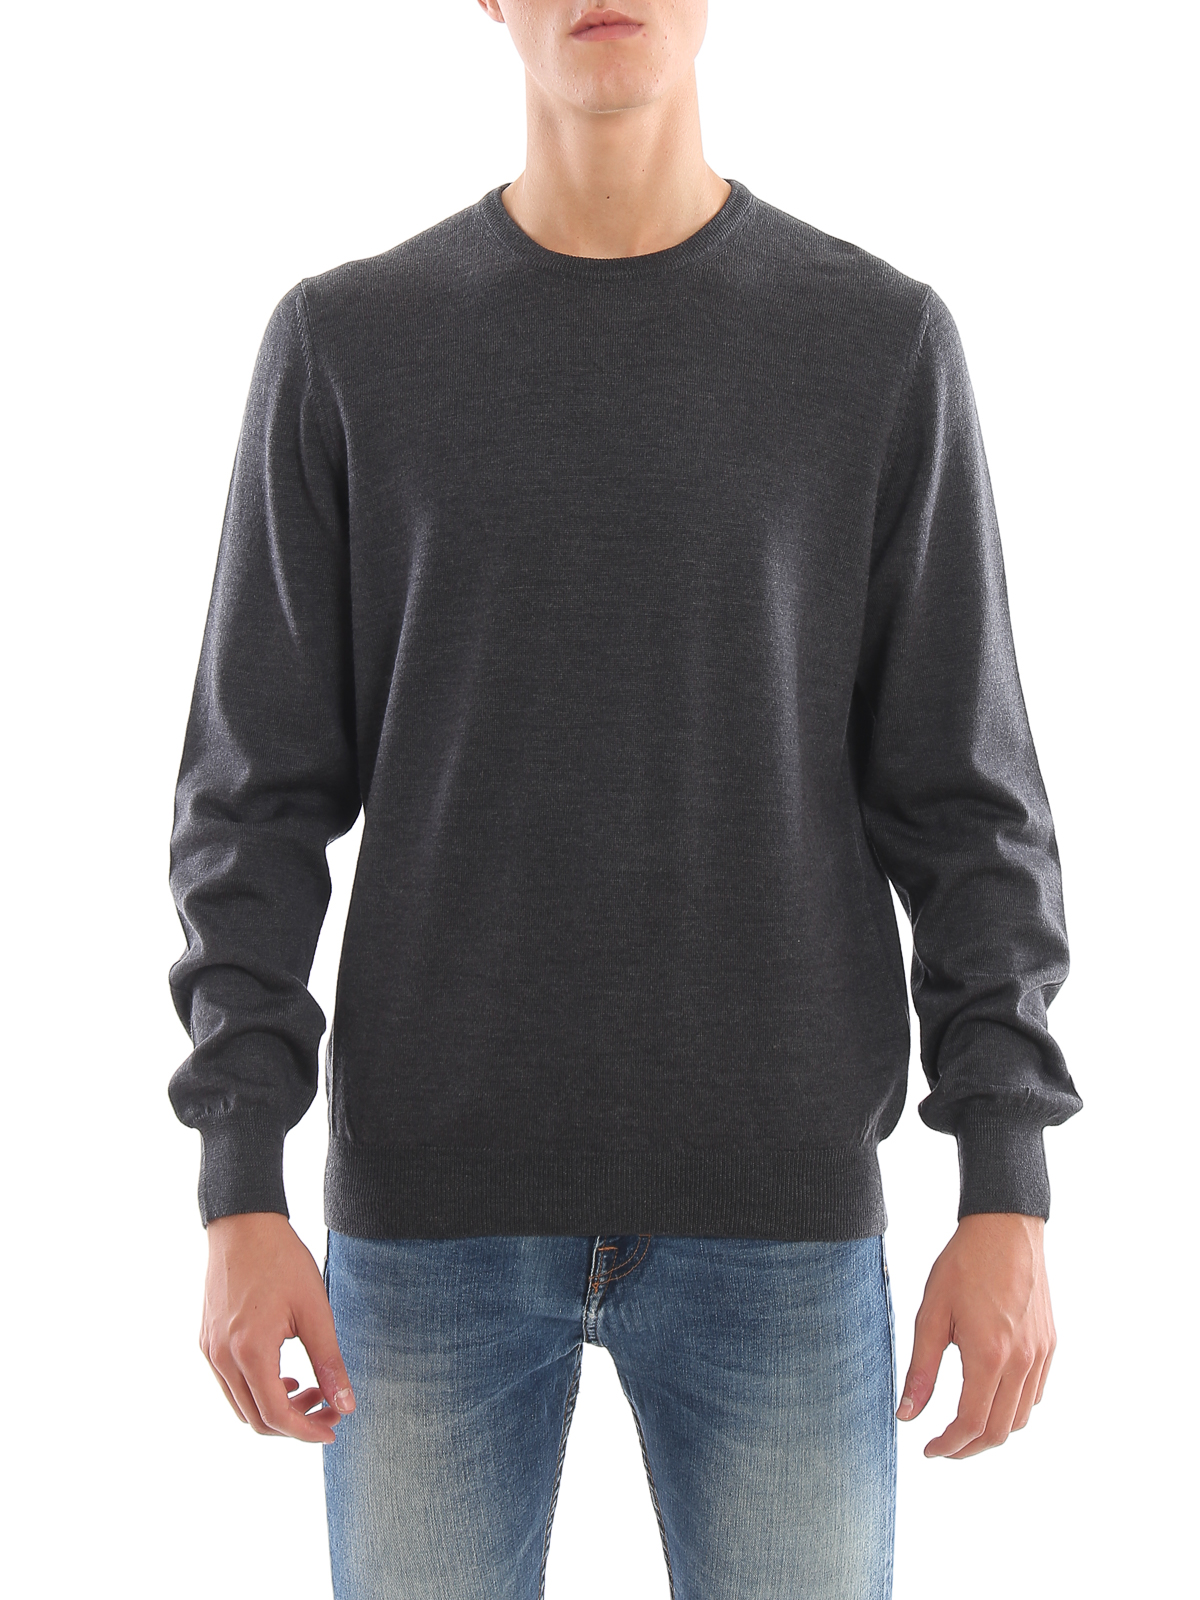 Crew necks Tagliatore - Dark grey worsted wool sweater - MARLEY567GSI190298